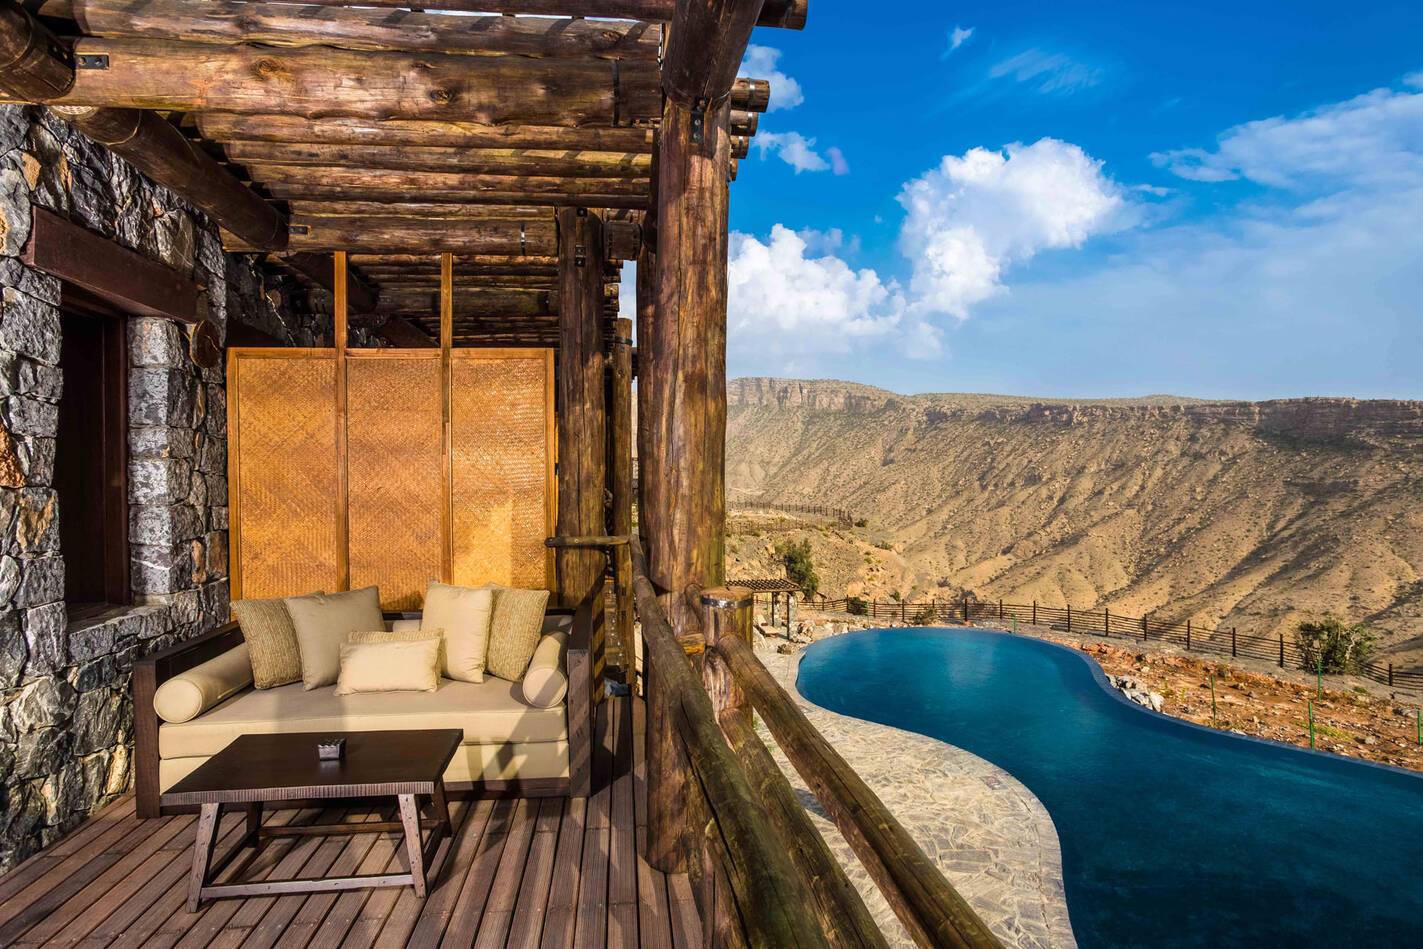 Oman Alila Jabal Akdhar Ridge View Balcony